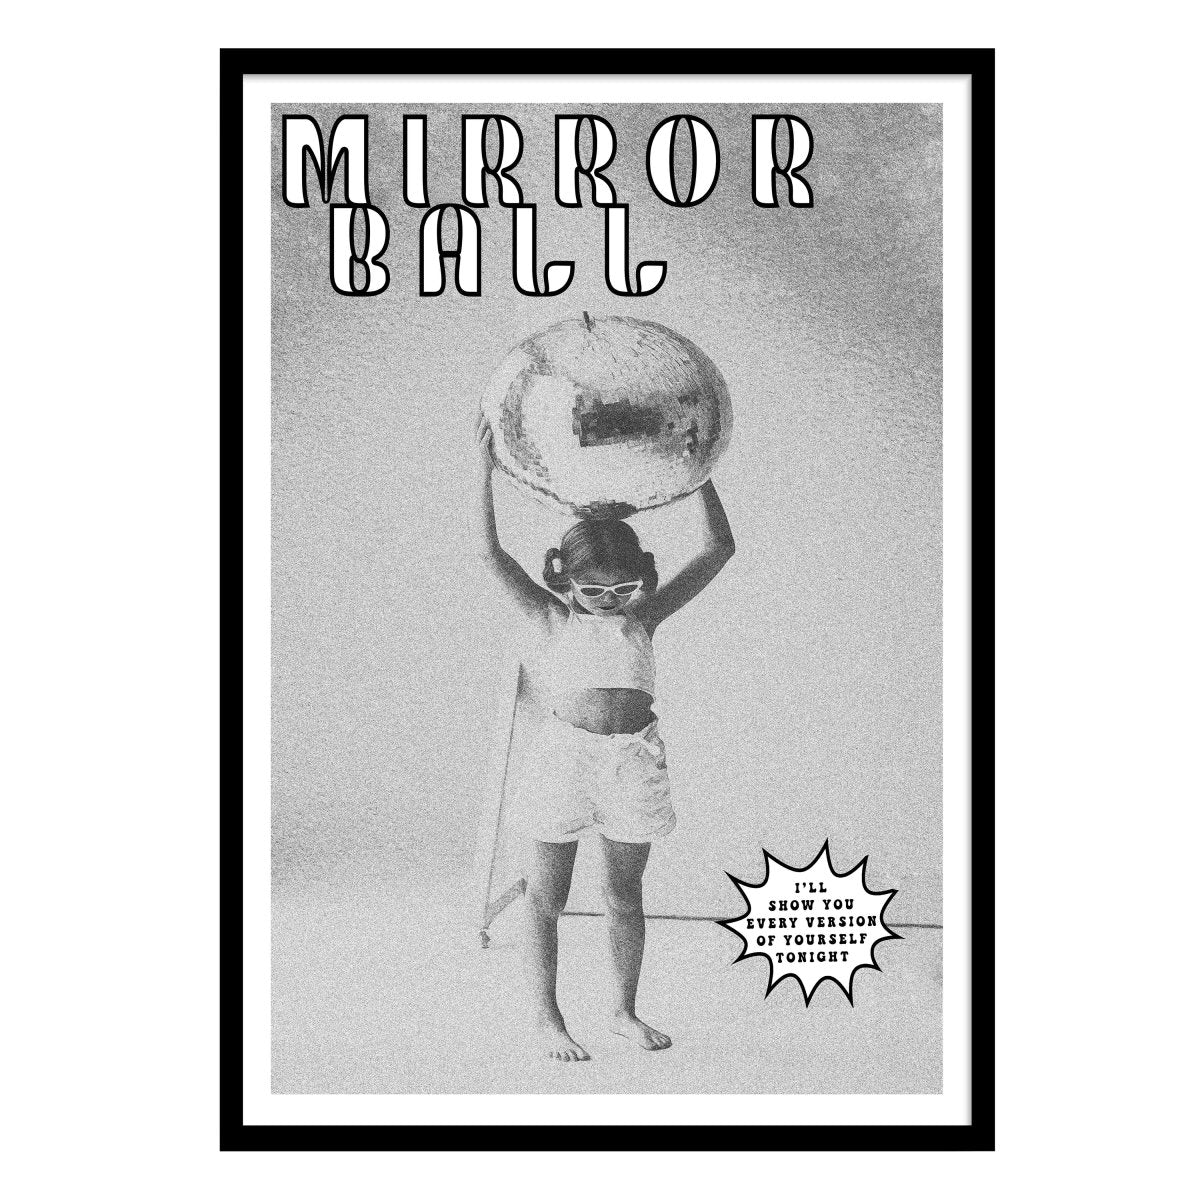 Mirrorball - ReeseFaithDesigns